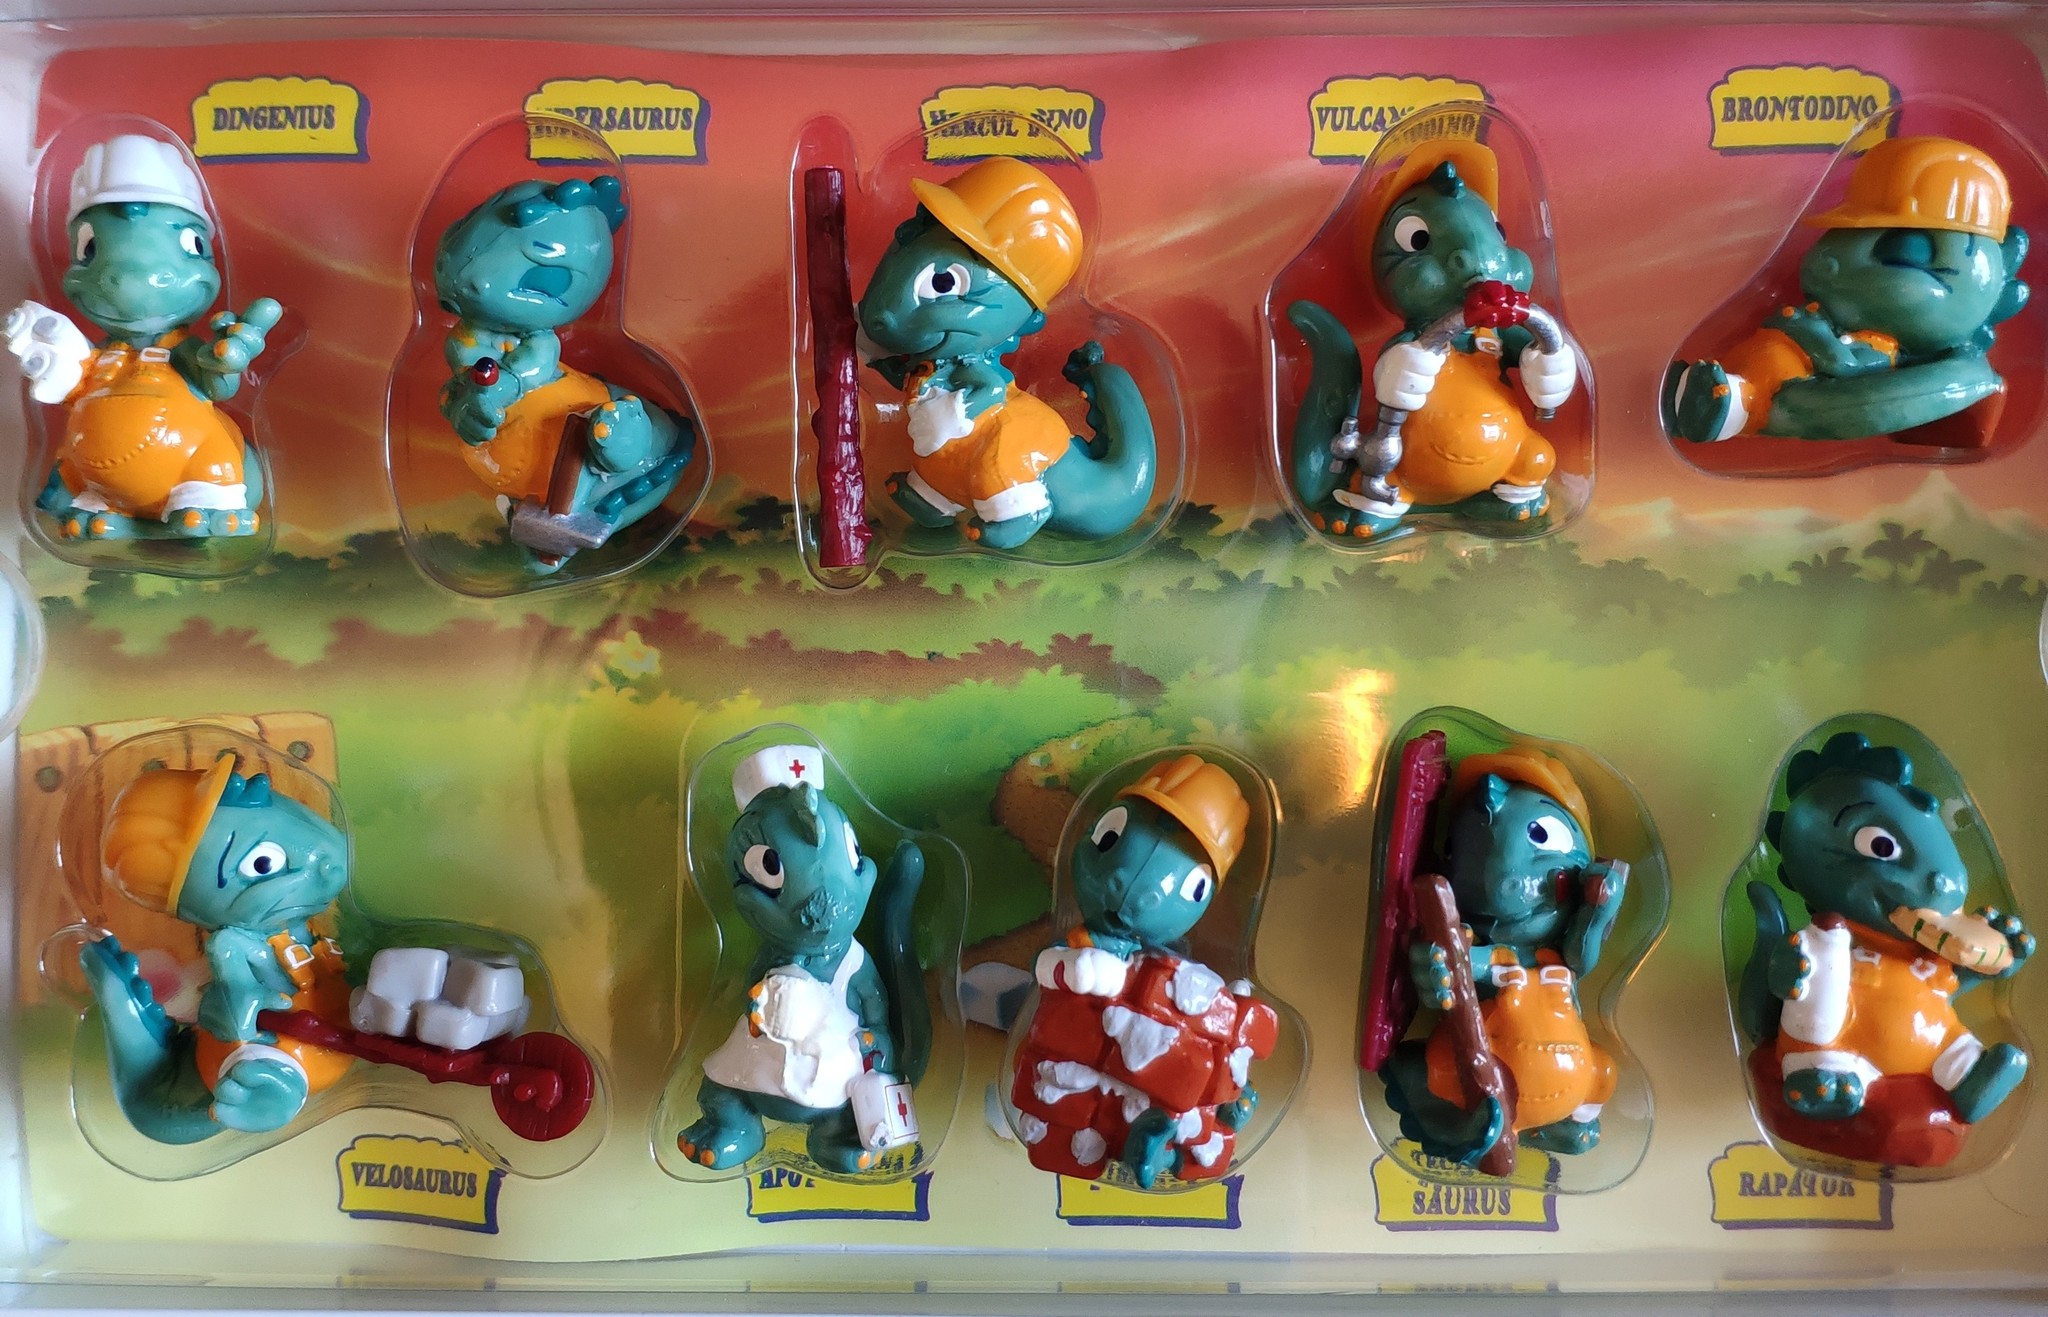 Игрушки из киндера 90 х. Коллекции Киндер сюрпризов 90 х. Коллекции игрушек Киндер сюрприз 90е. Коллекции игрушек из Киндер сюрприза 90-х. Киндер сюрприз 90-е.